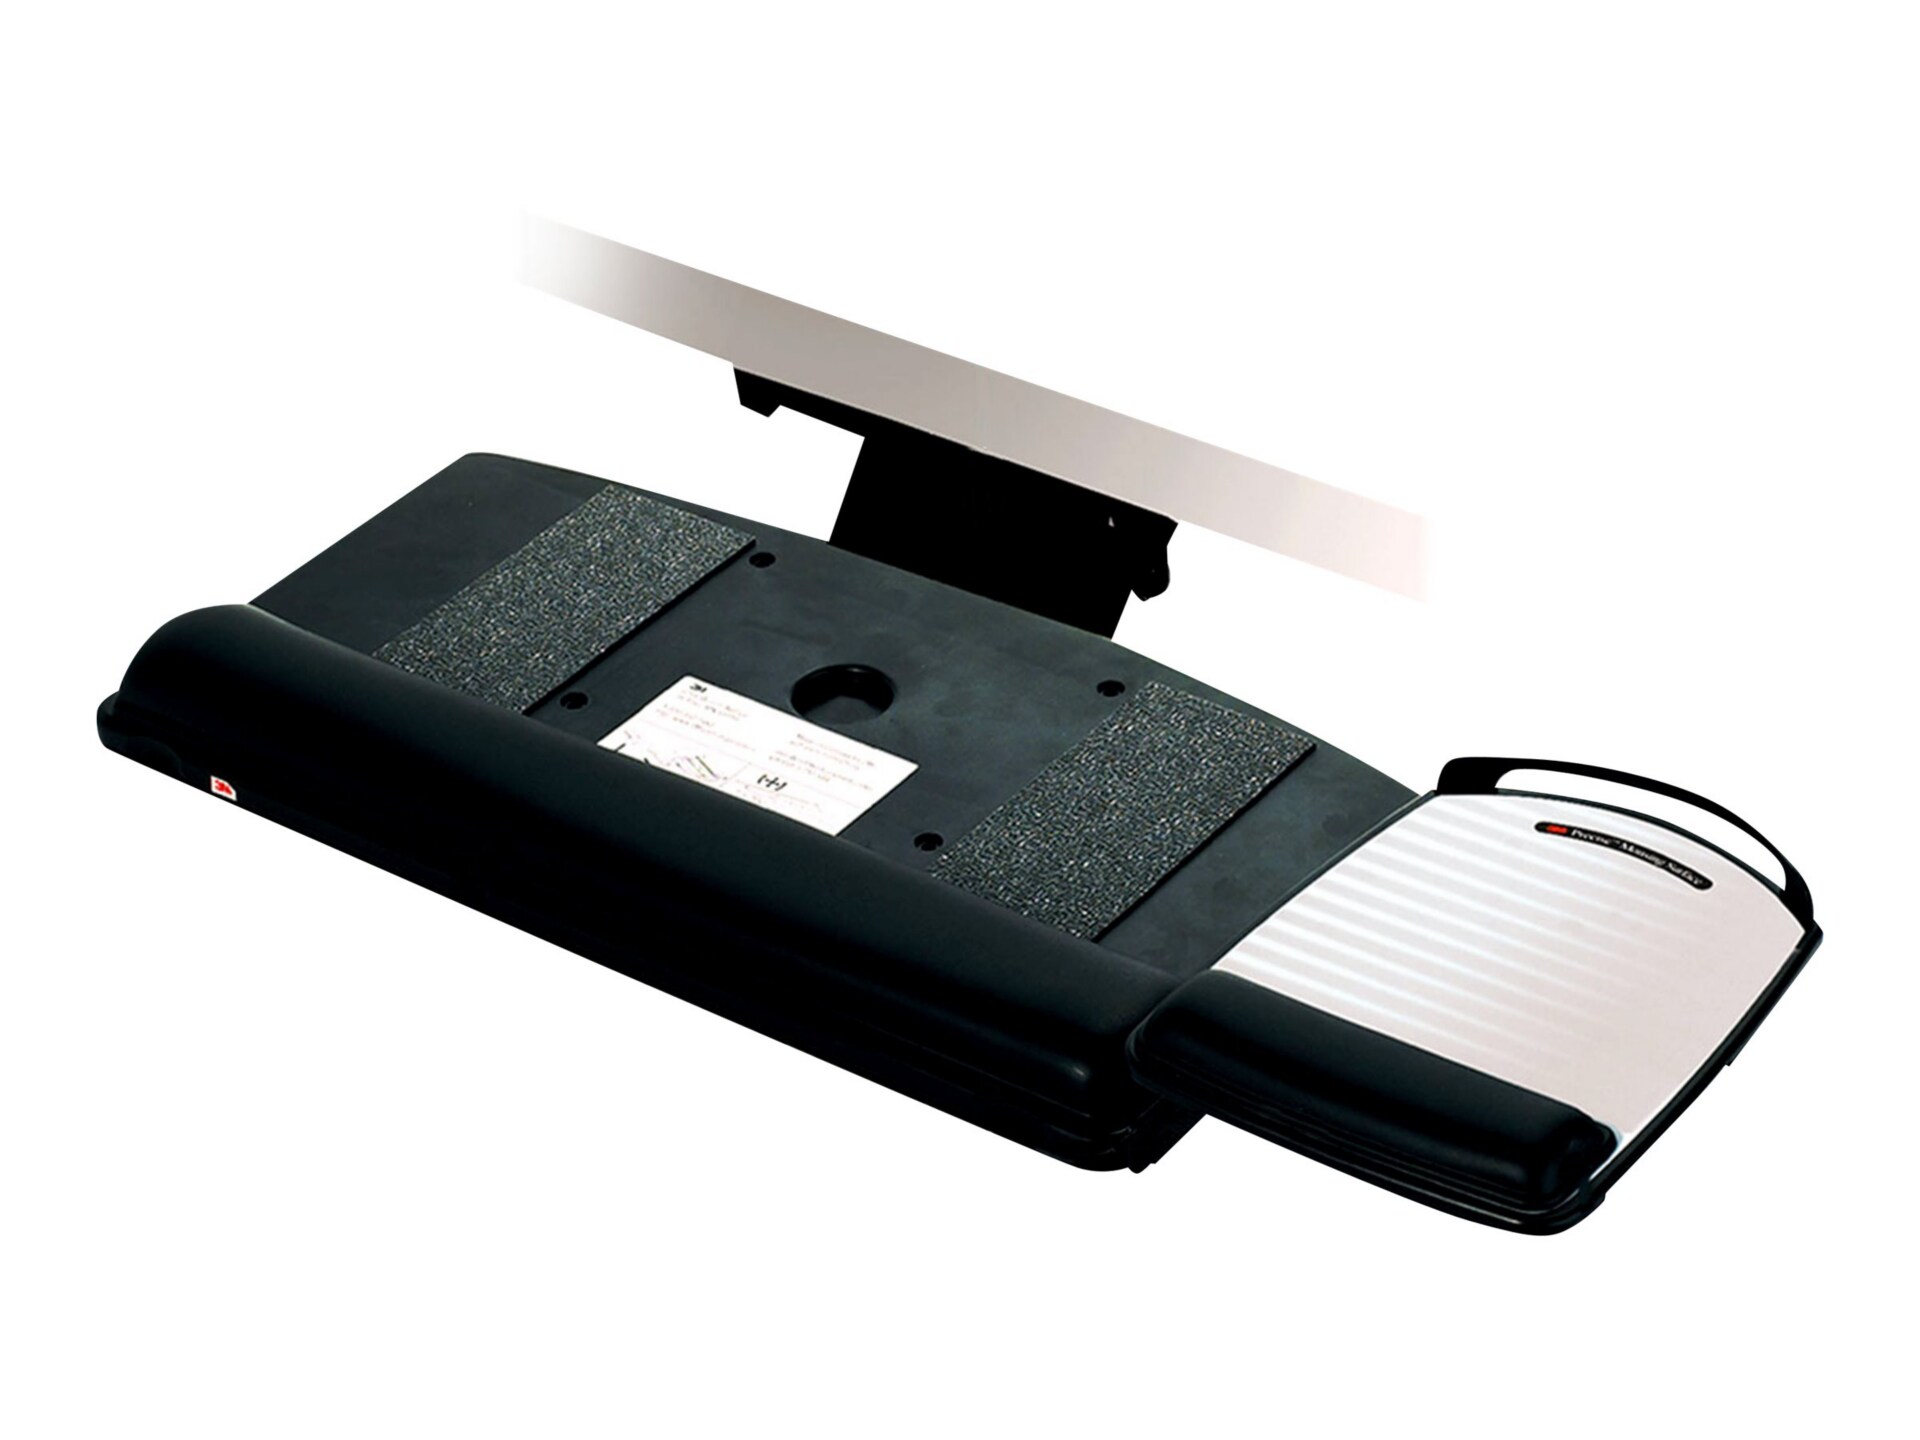 3M Adjustable Keyboard Tray AKT101LE - keyboard/mouse arm mount tray